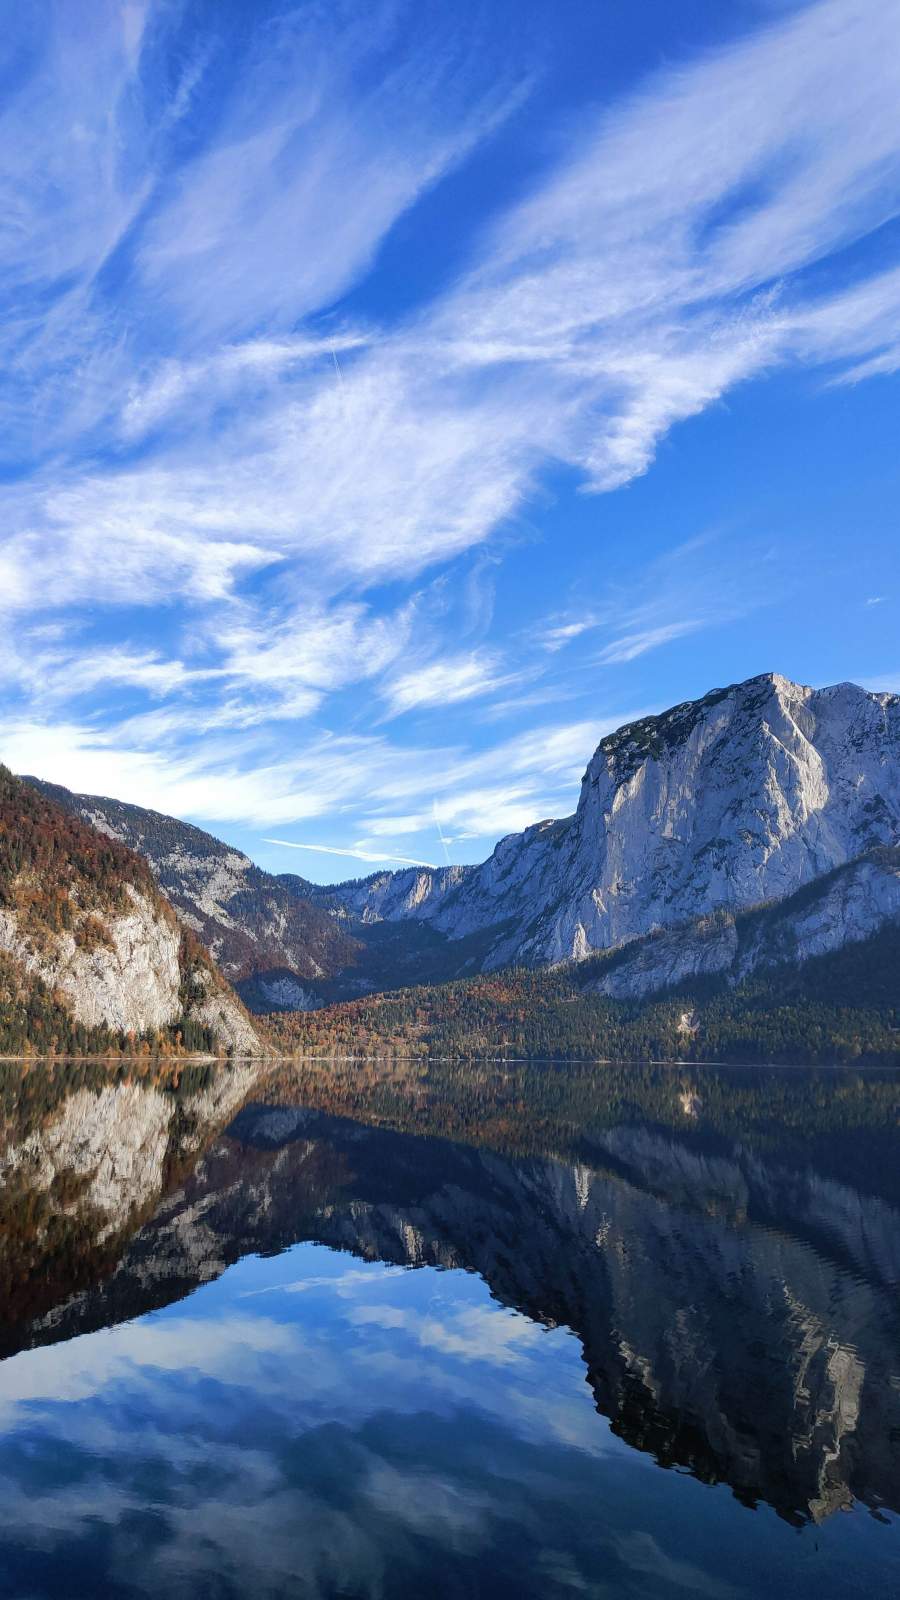 Lake Reflection of Mountains iPhone Wallpaper